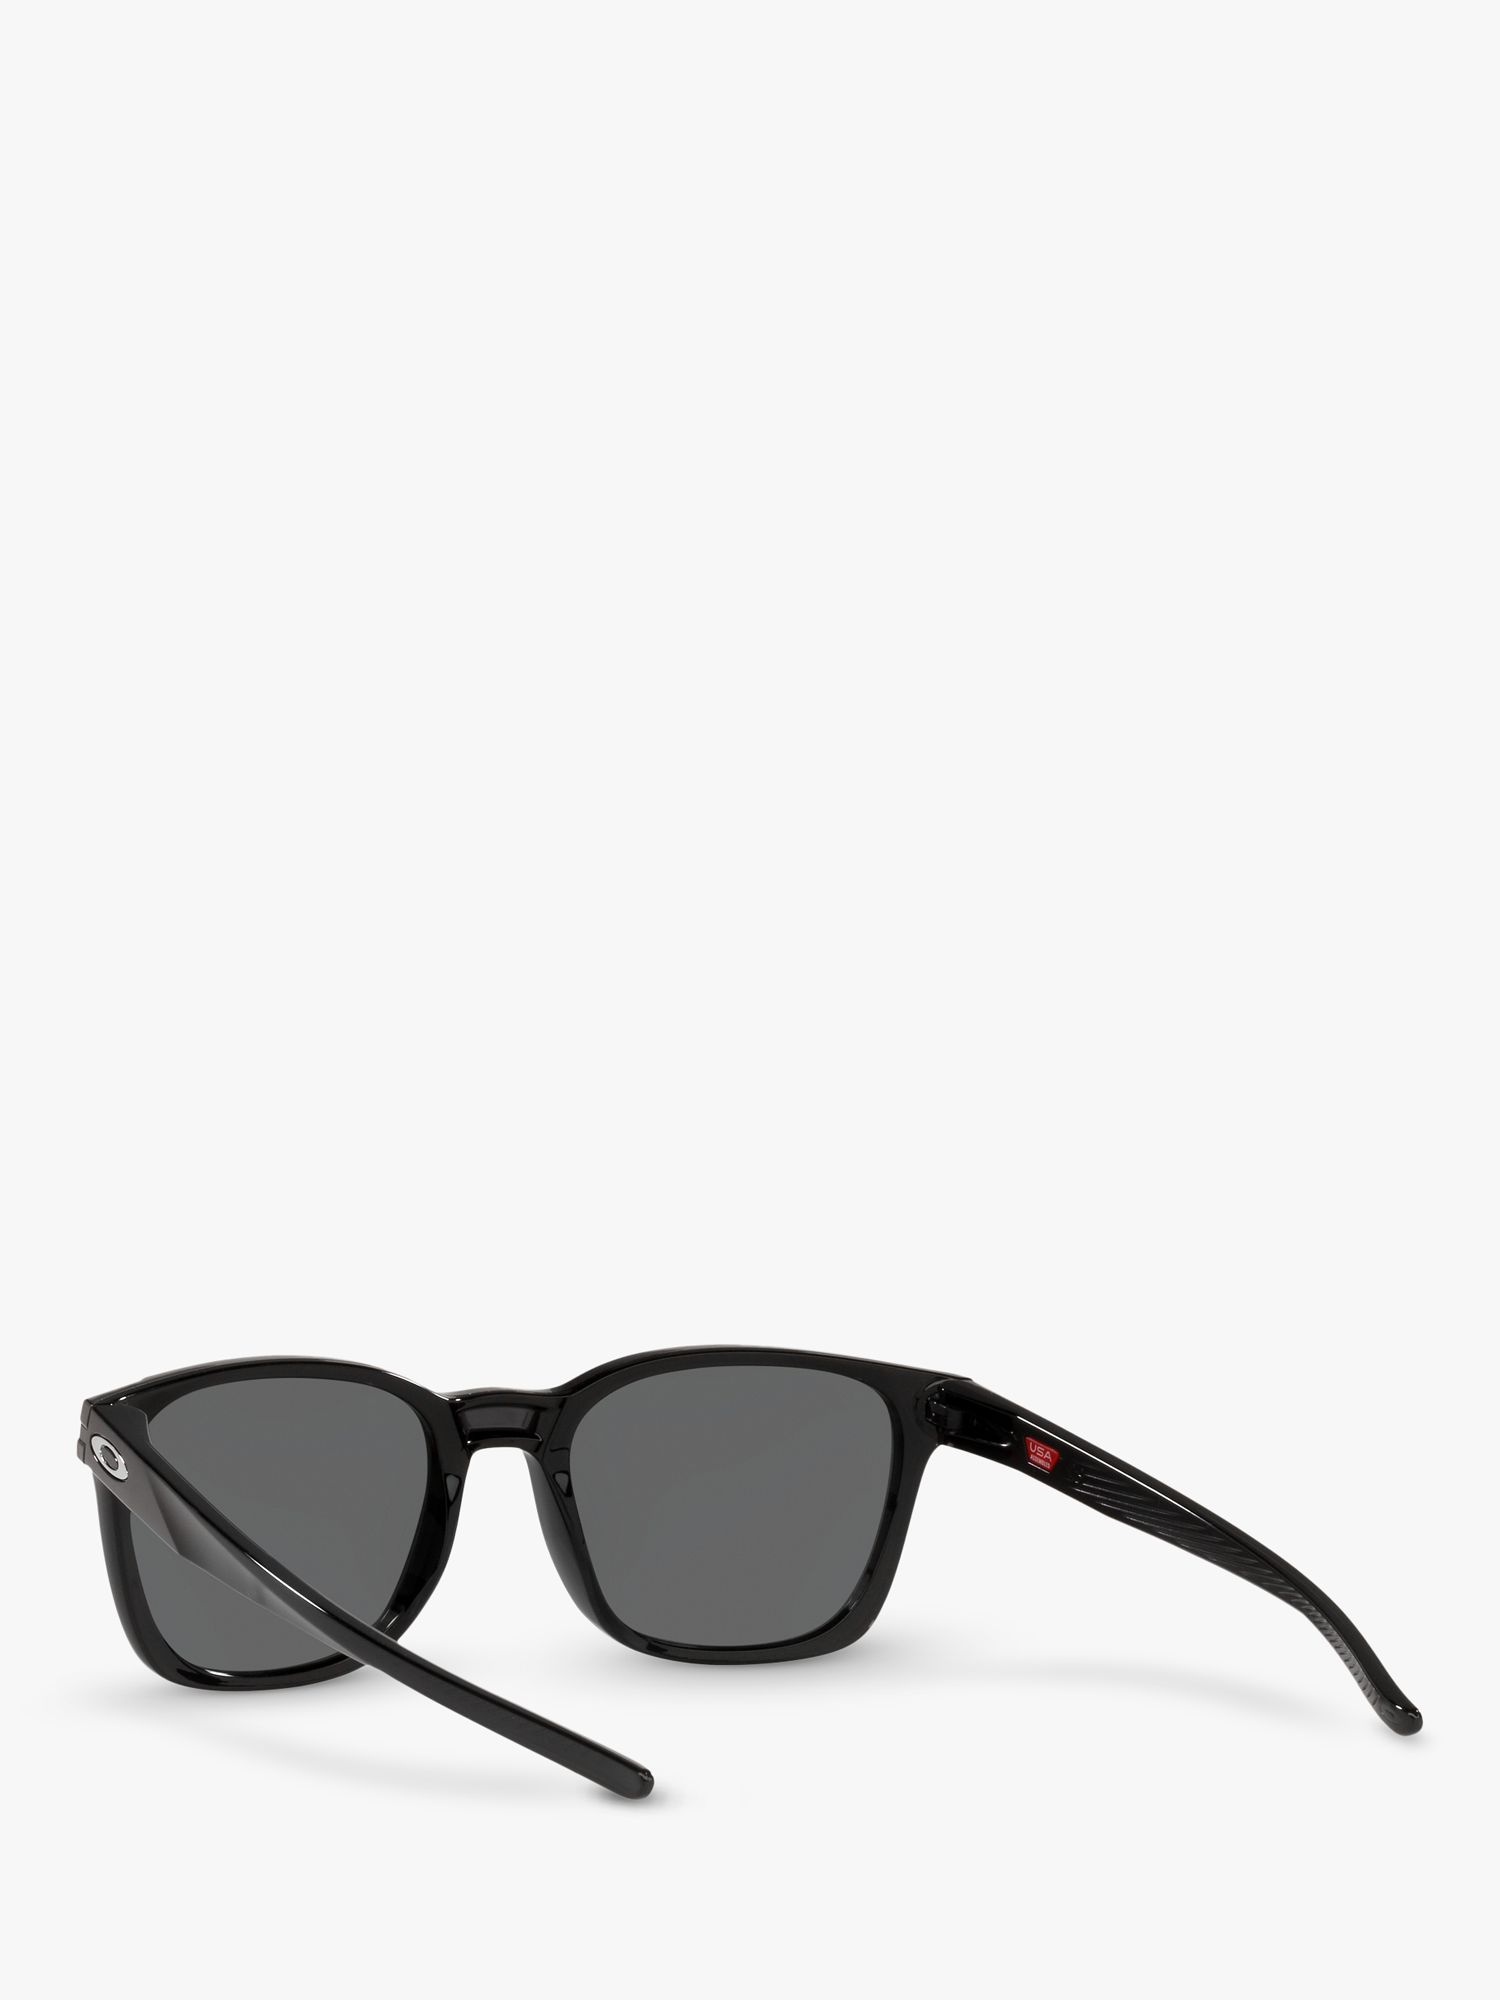 Buy Oakley OO9018 Men's Objector Polarised Sunglasses, Black Ink/Grey Online at johnlewis.com